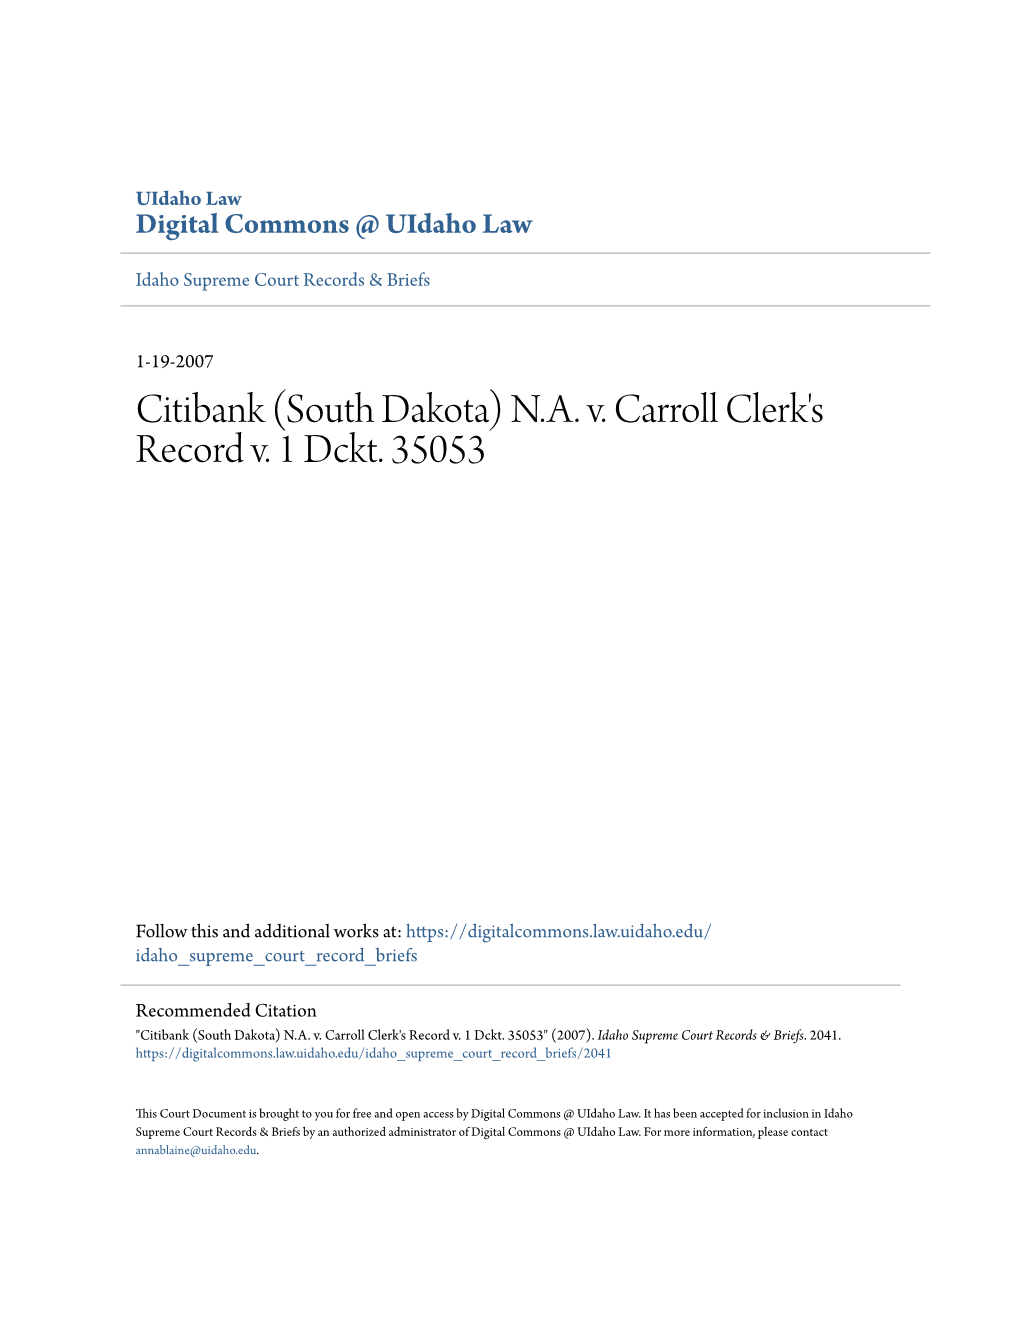 NA V. Carroll Clerk's Record V. 1 Dckt. 35053